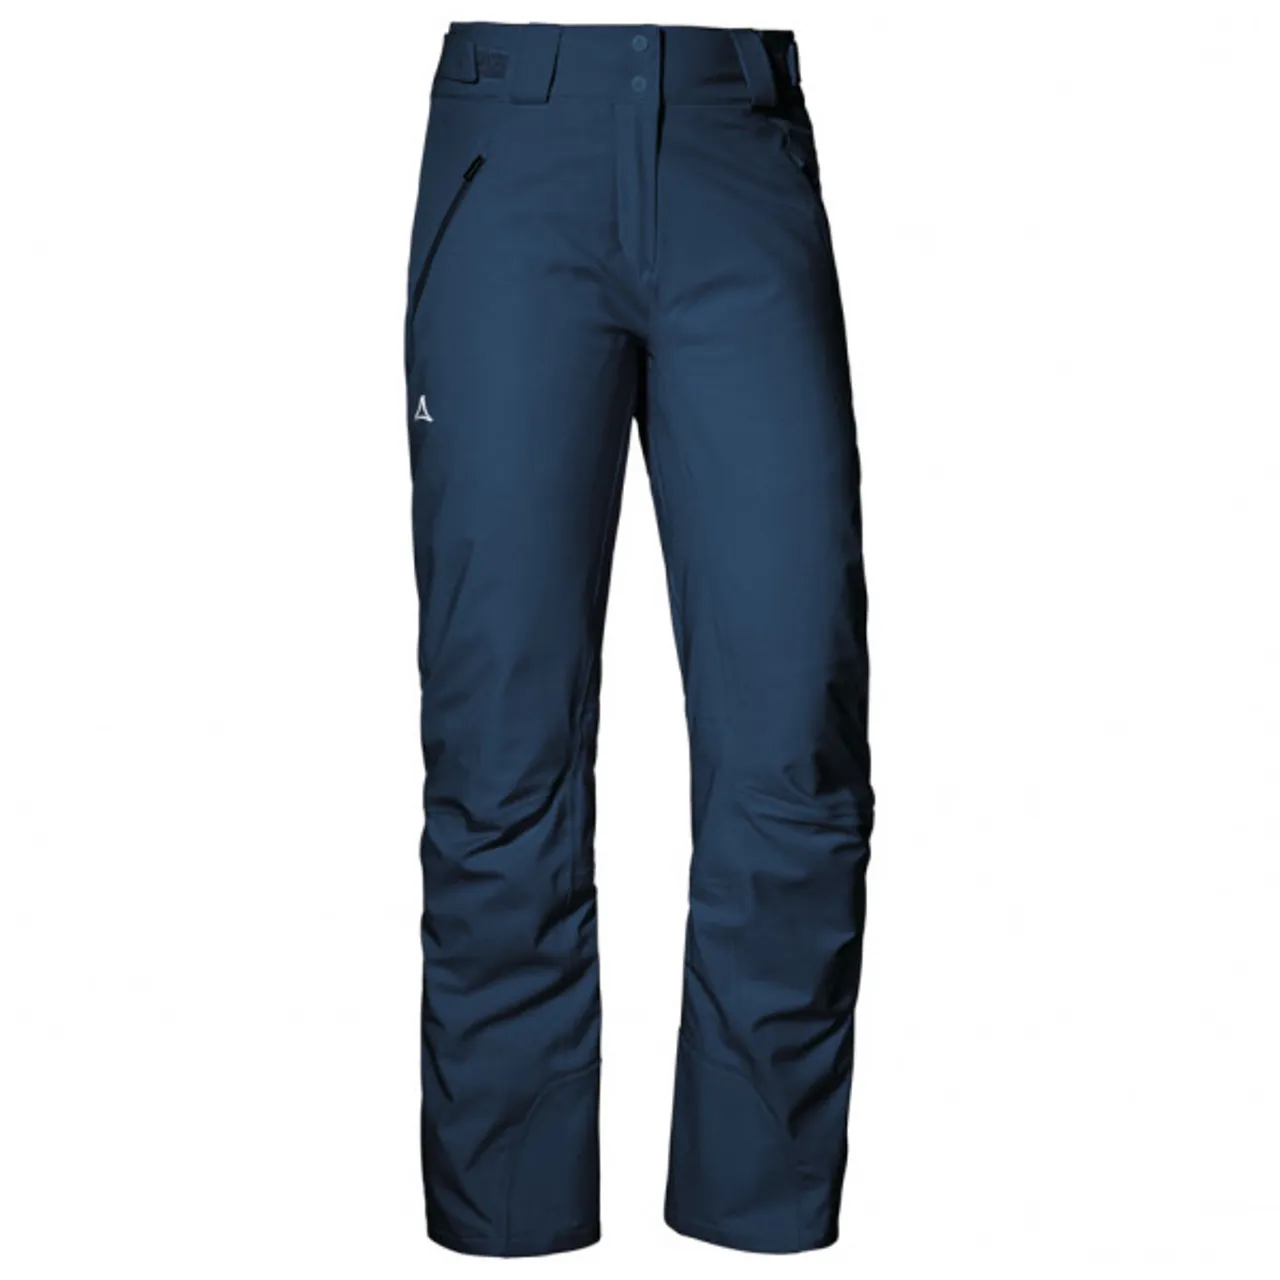 Schöffel - Women's Ski Pants Weissach - Ski trousers